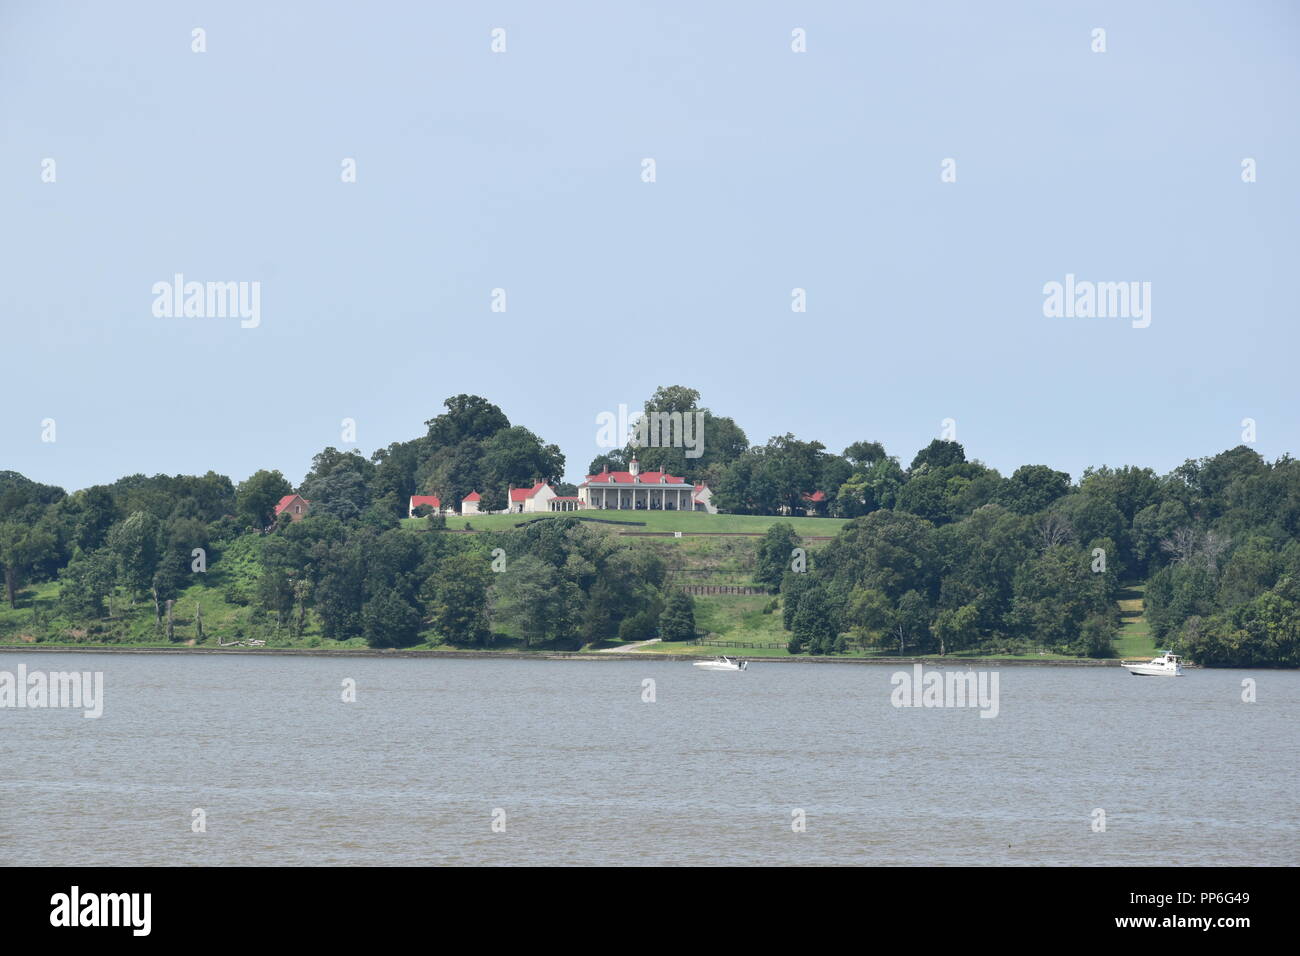 George Washington's Mount Vernon home and estate in Mount Vernon, Virginia, United States of America Stock Photo